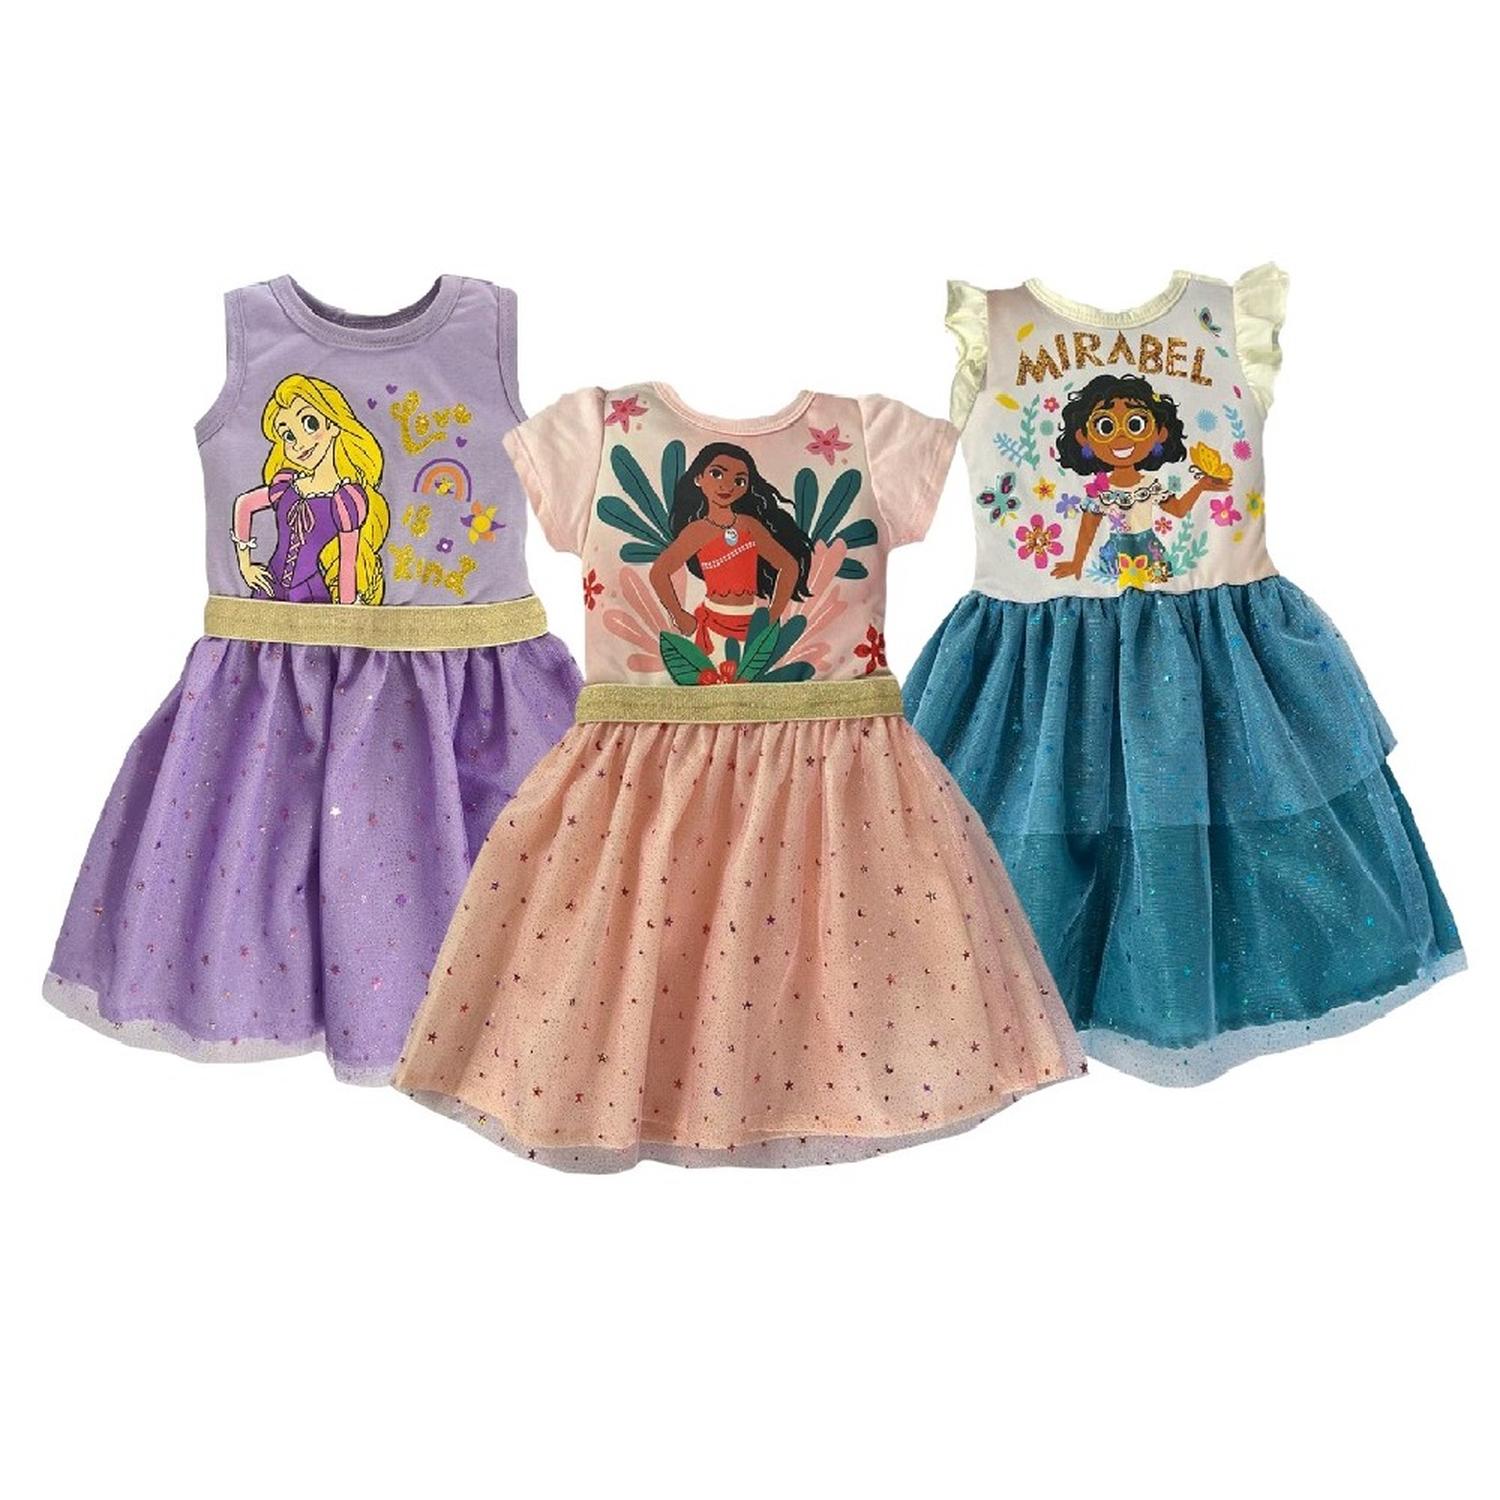 Kit 3 Vestidos Disney Rapunzel, Moana, Mirabel Multicolor